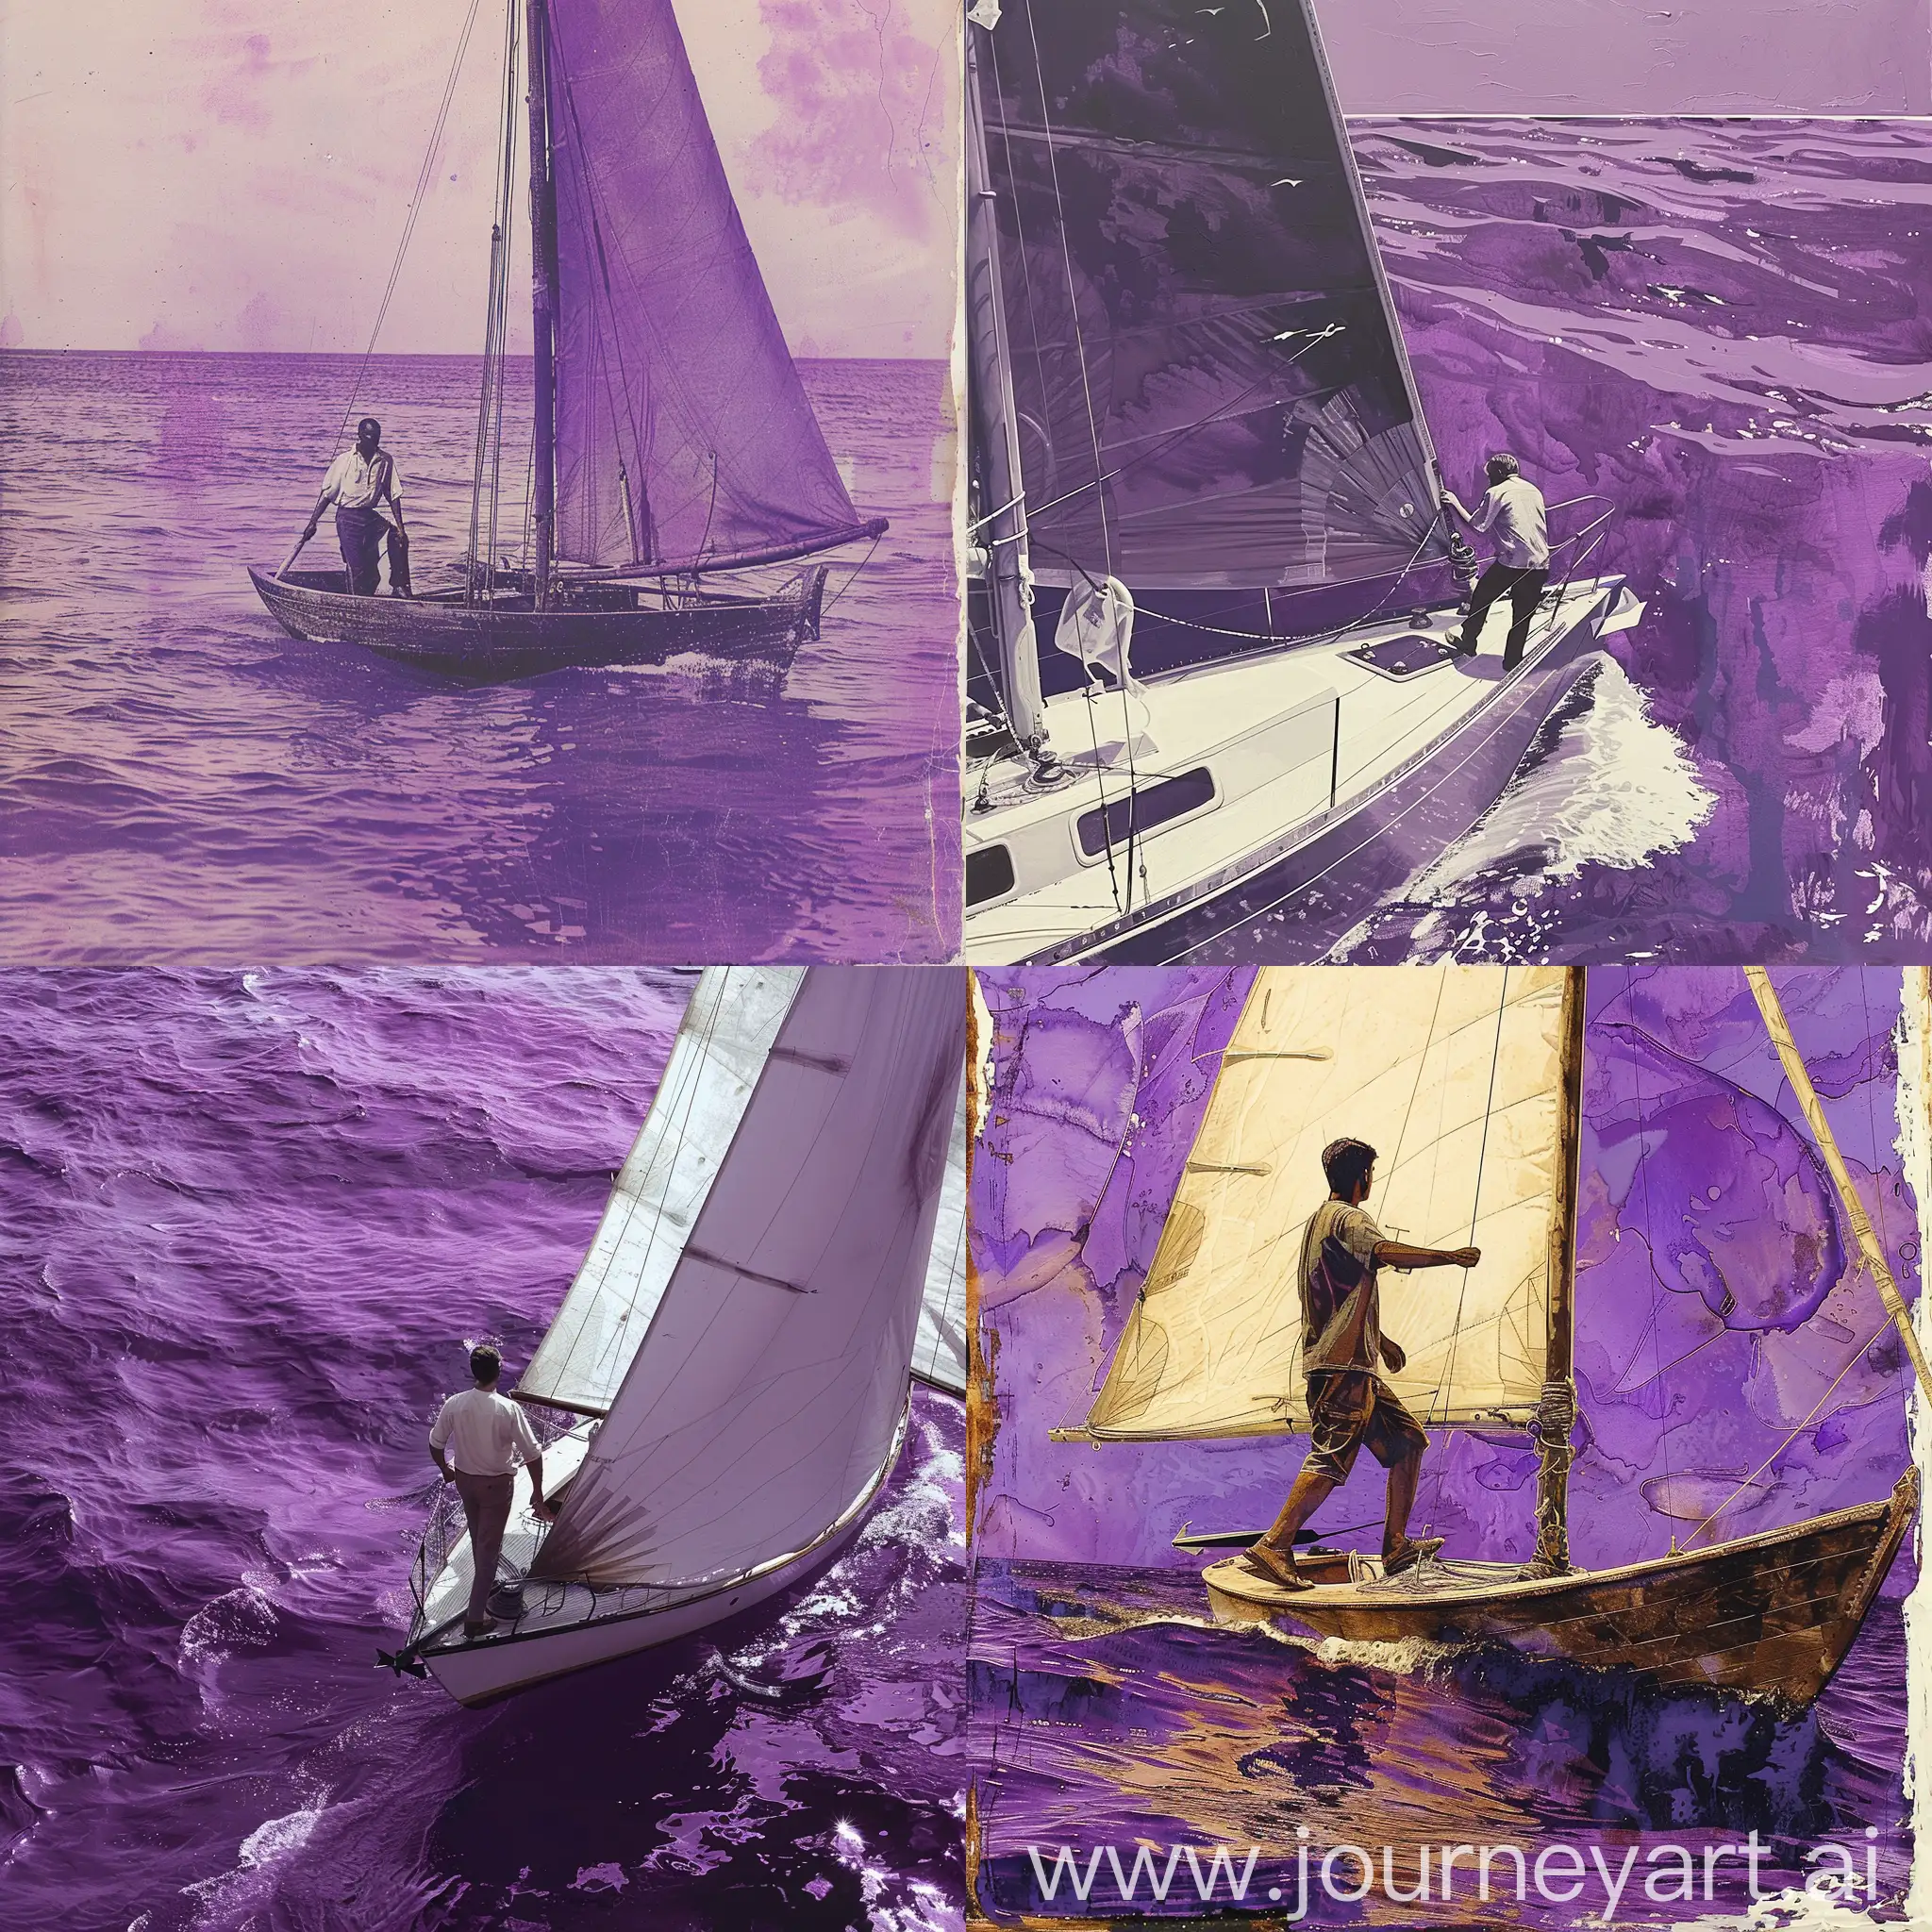 Man-Boarding-Sailboat-on-a-Purple-Sea